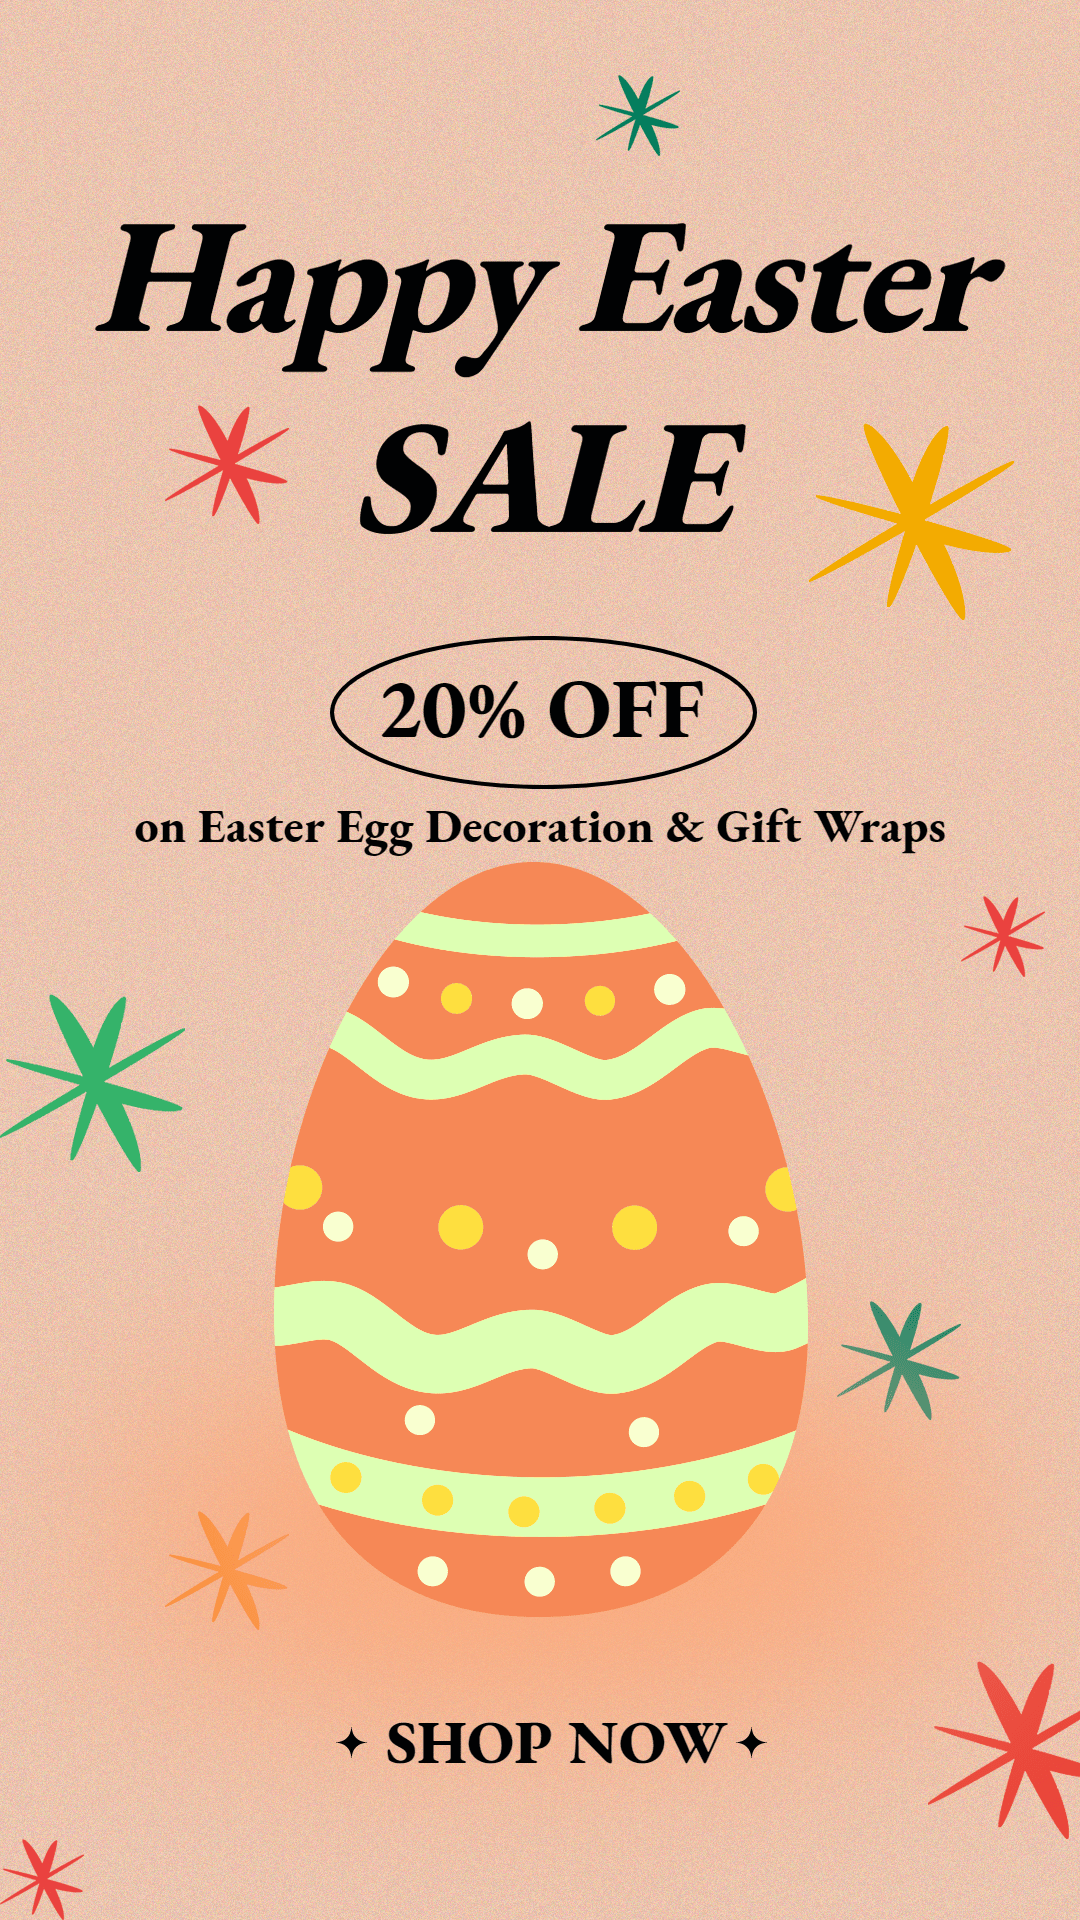 Ellipse Element Easter Egg Home Decorations Sale Promotion Ecommerce Story预览效果